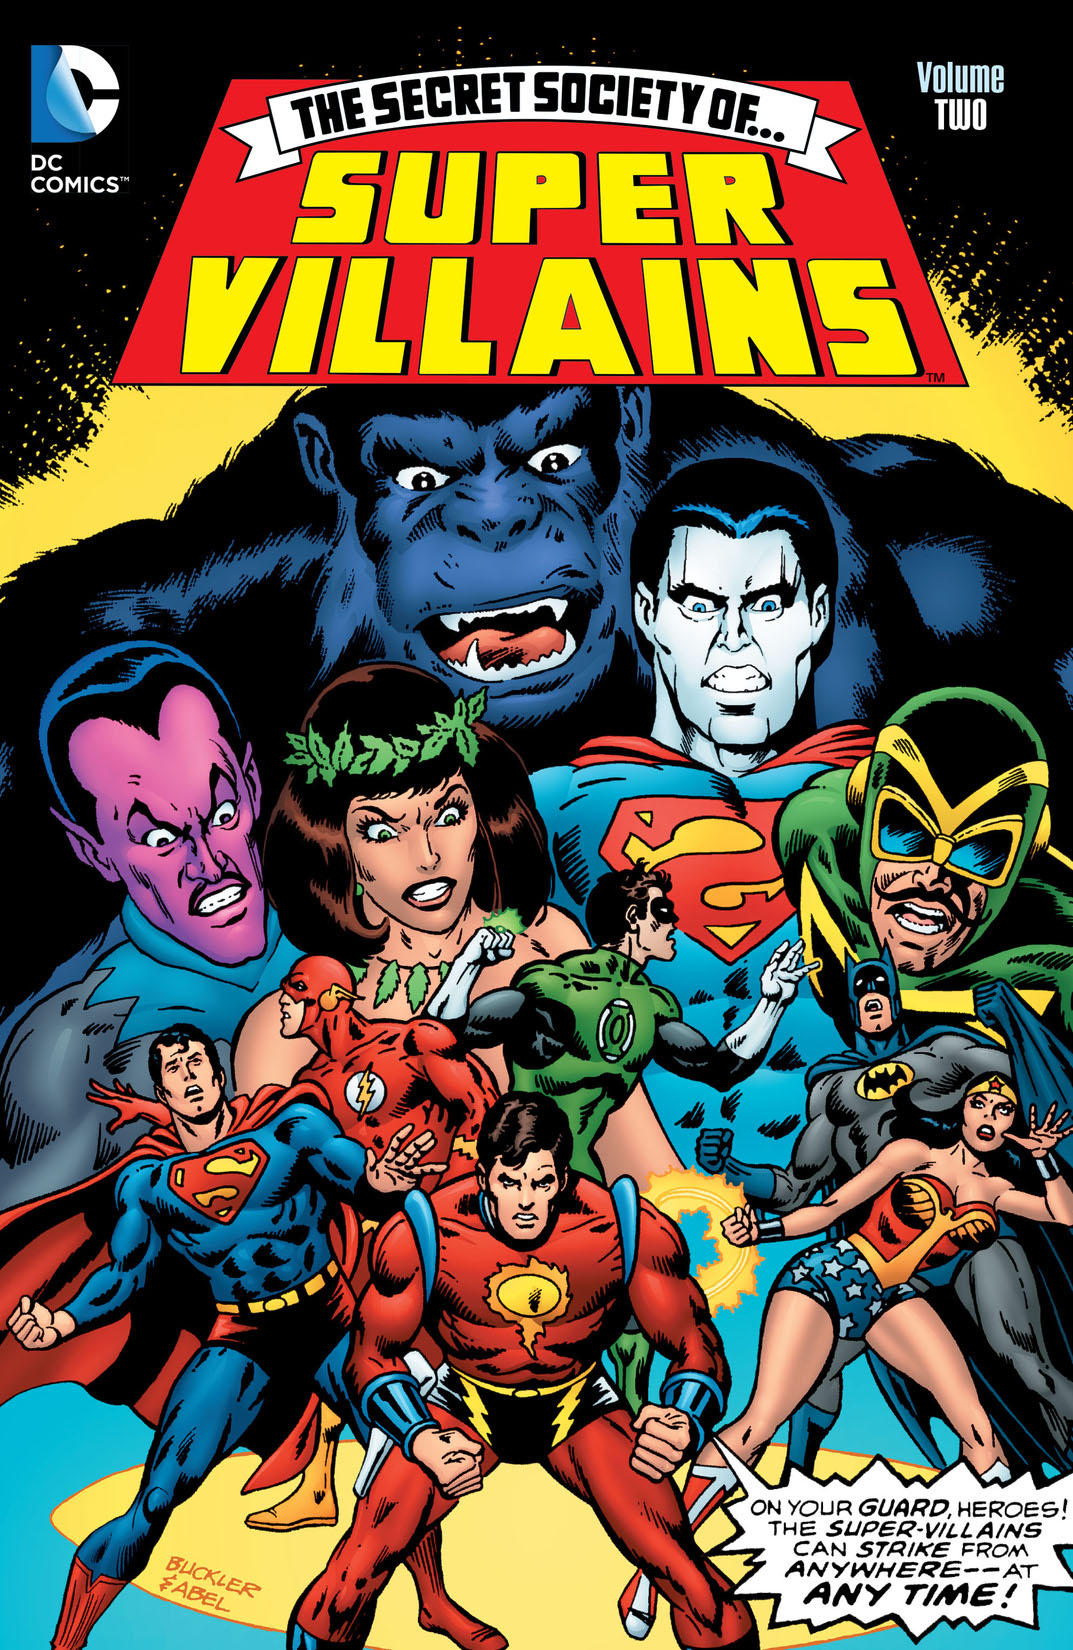 Secret Society of Super-Villains Vol. 2 preview images